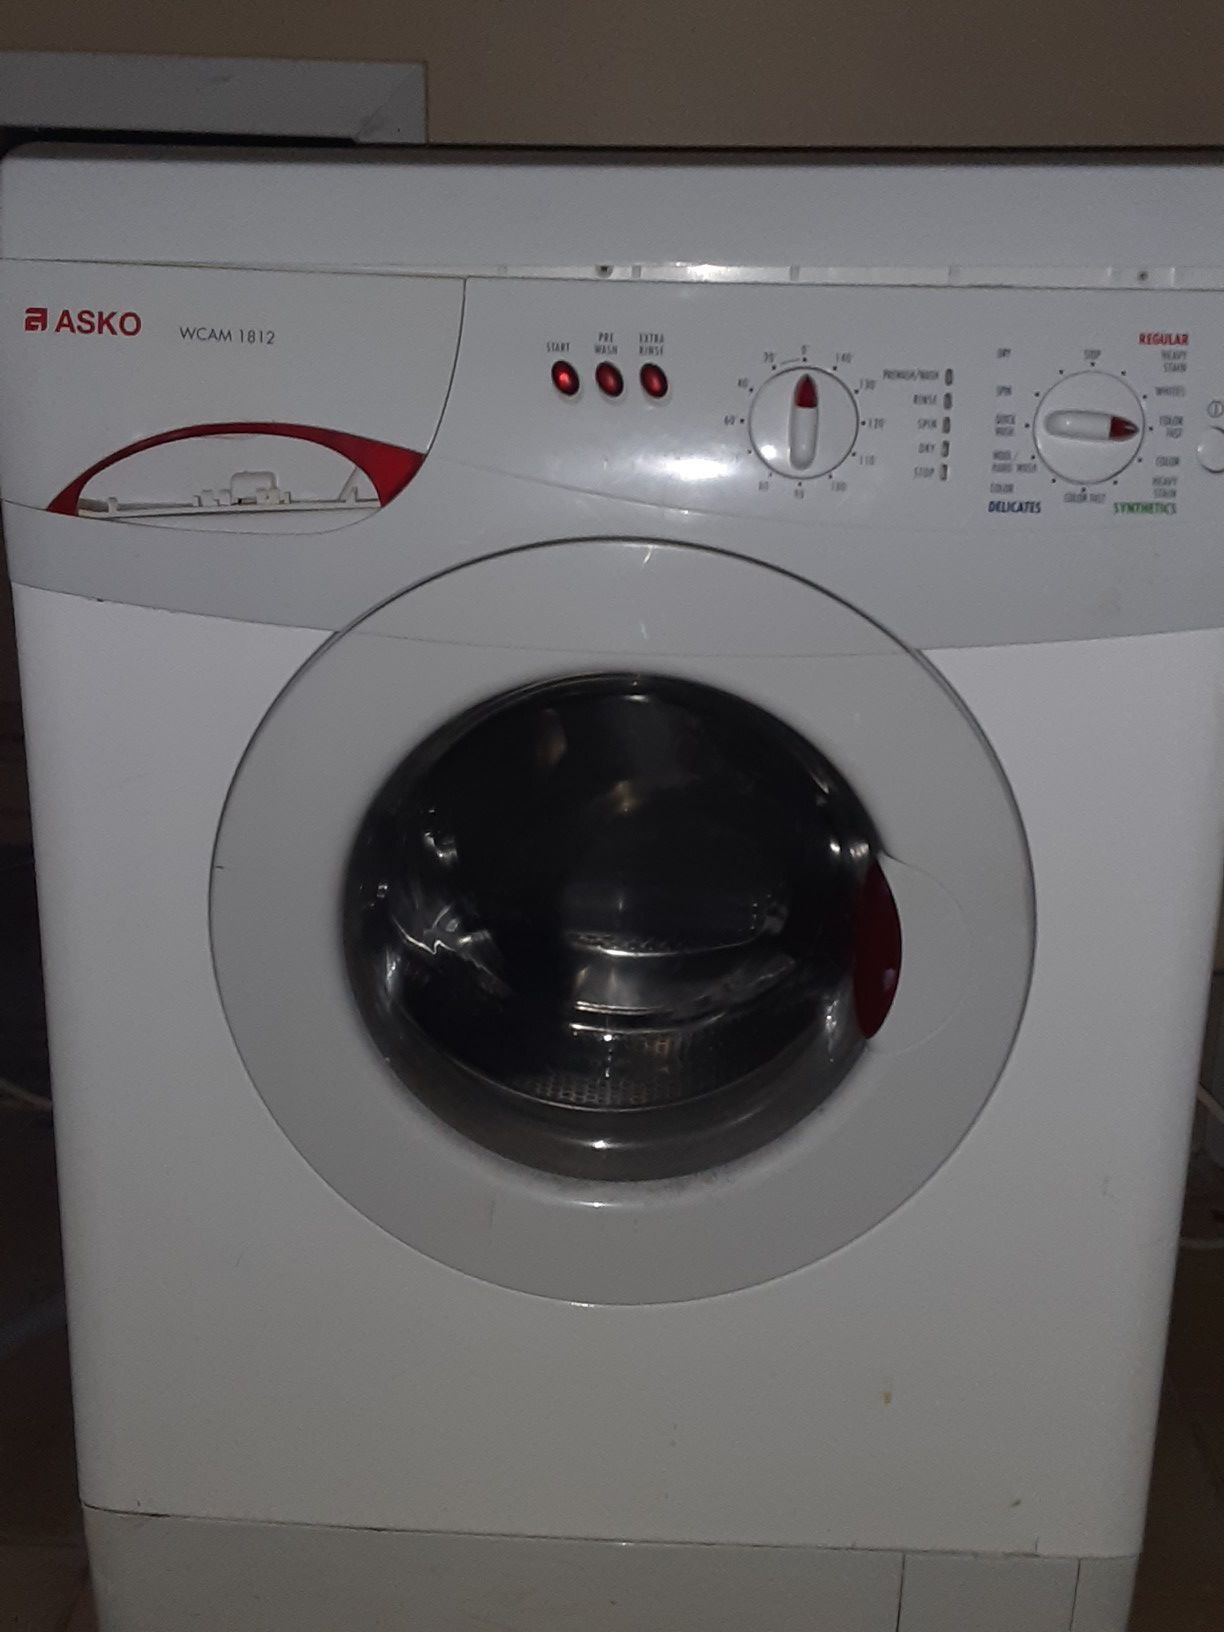 ASKO washer/dryer combo